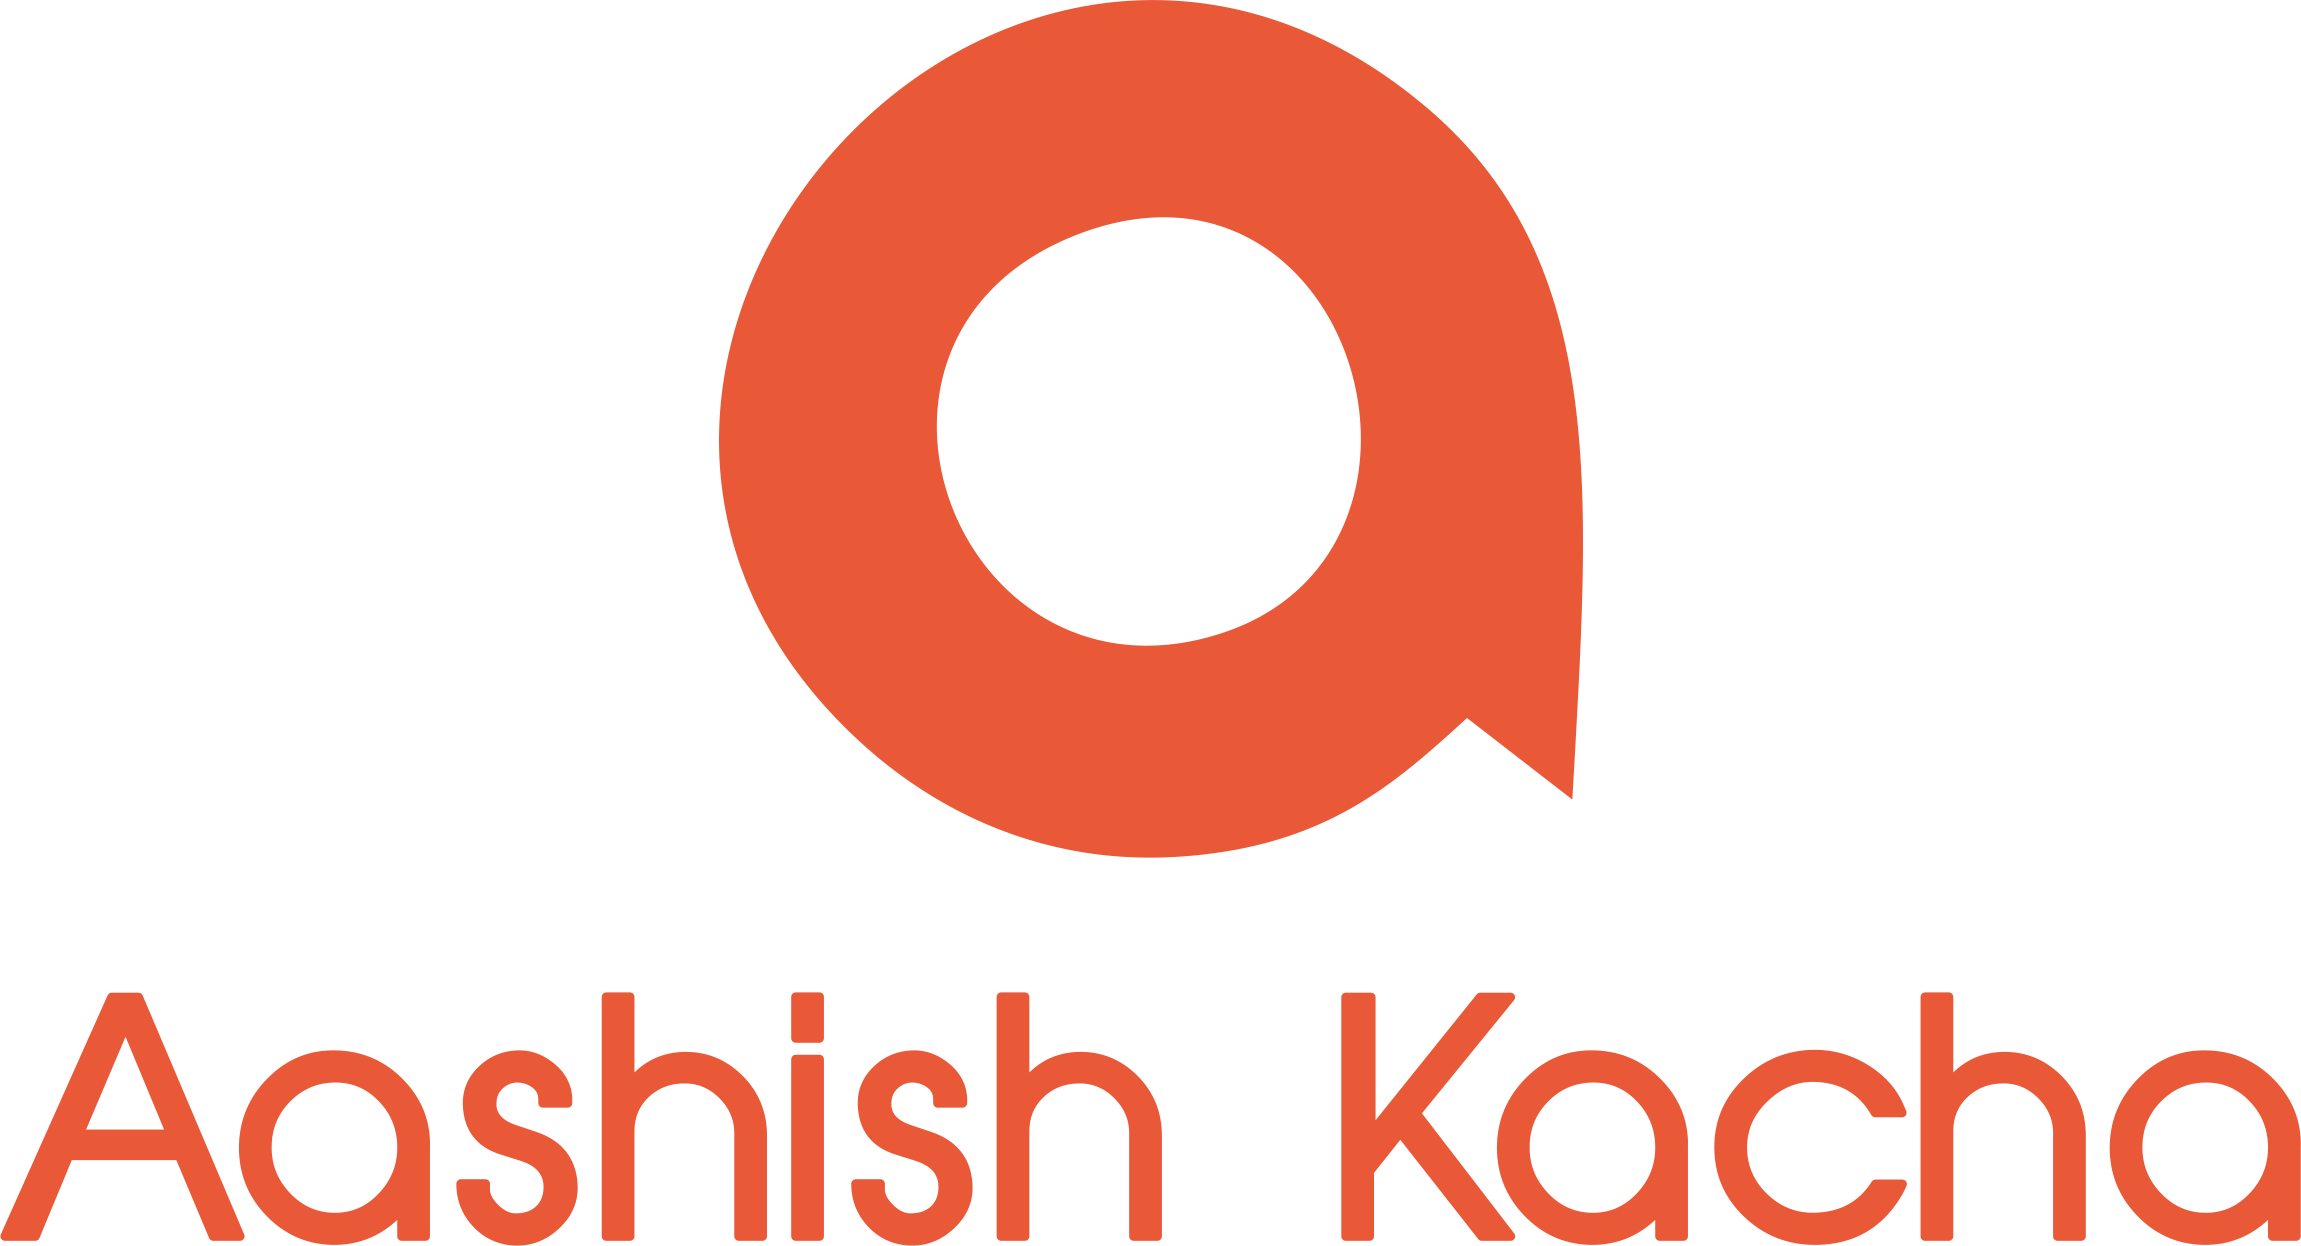 aashishkacha.com